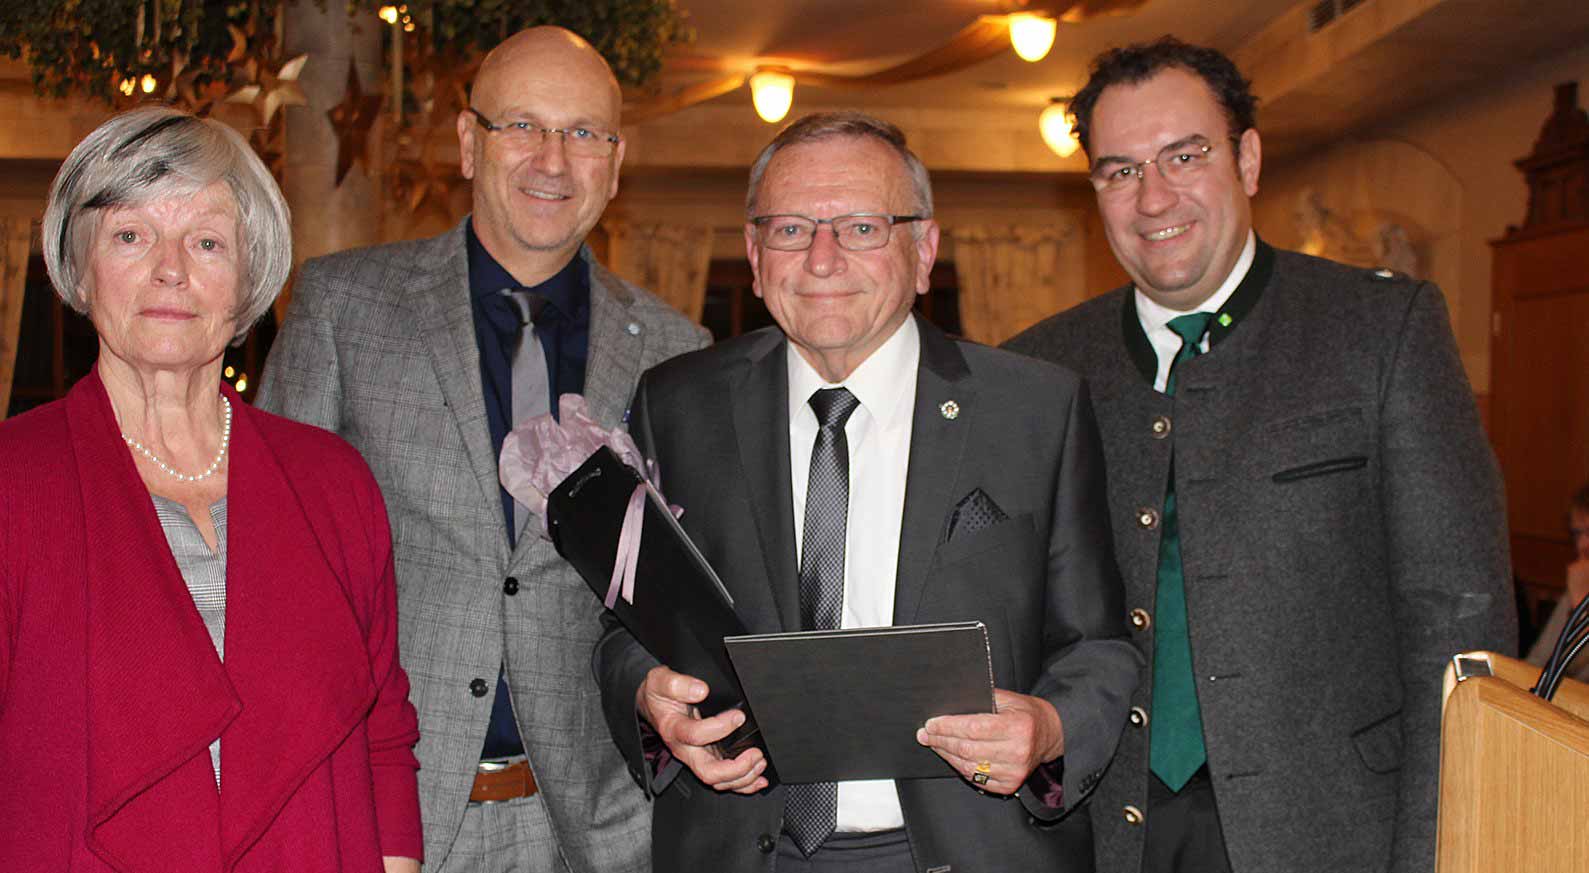 v.l.: 3. Bürgermeisterin Traudl Schretzlmeier, 1. Bürgermeister Dr. Uwe Brandl, Peter Hübl und 2. Bürgermeister Dr. Bernhard Resch (Foto: Ingo Knott/Stadt Abensberg)